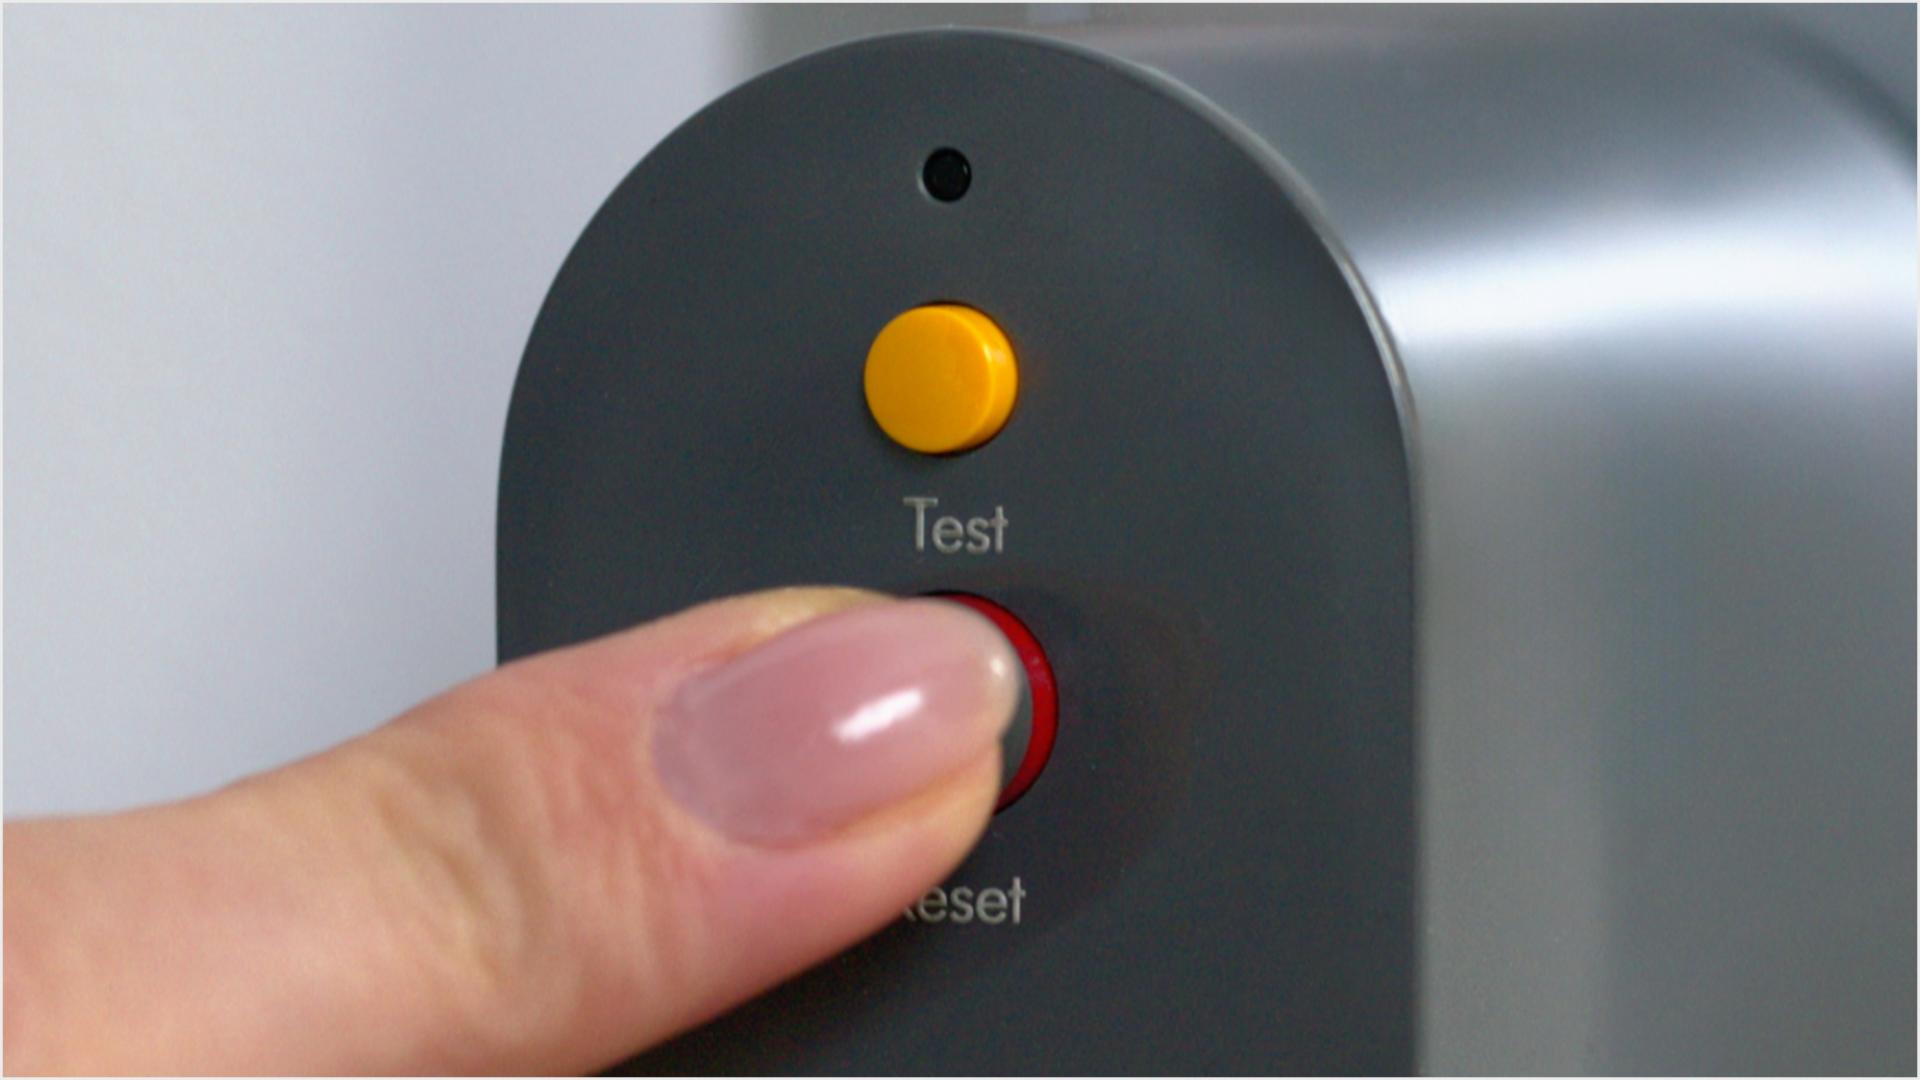 PRCD 플러그의 재설정 버튼을 누르는 손가락이 표시됩니다.